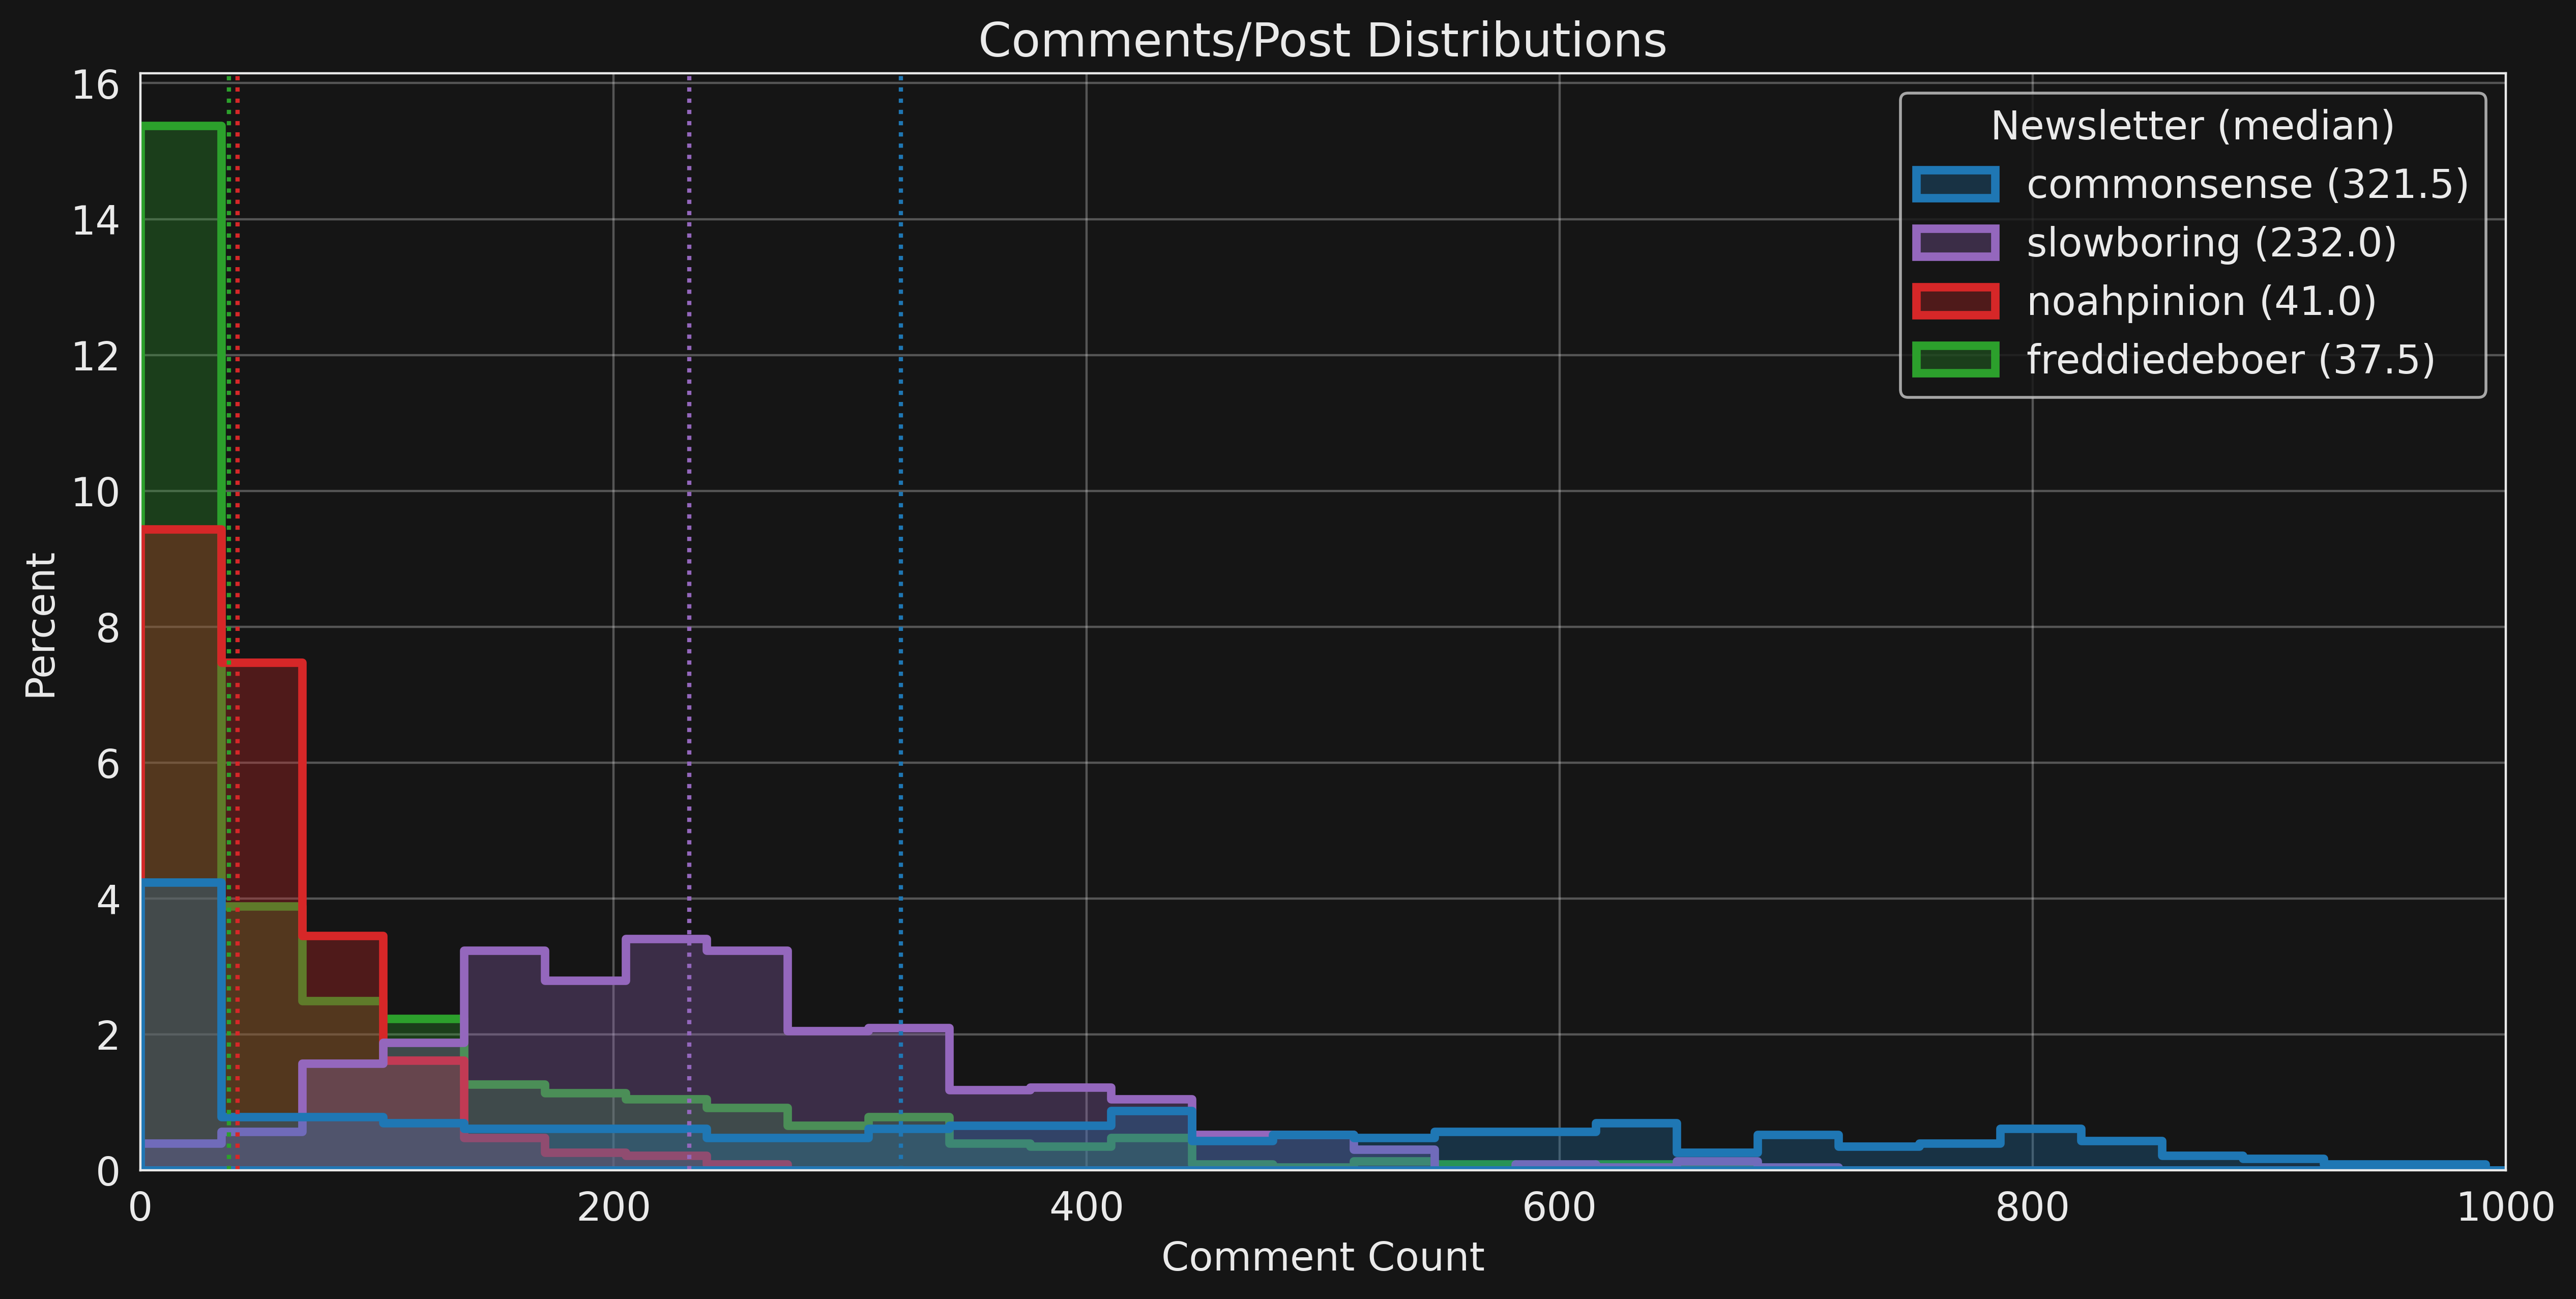 Comments per a post distributions